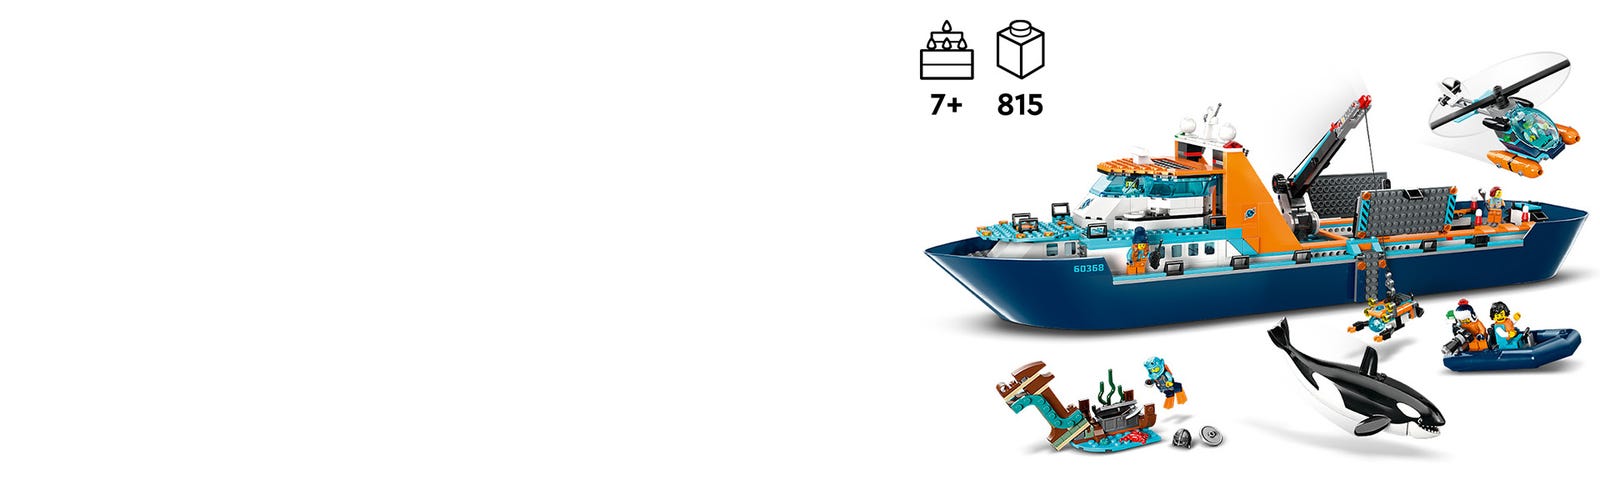 Lego Fishing Boat Project - atana studio, ideas.lego.com/pr…